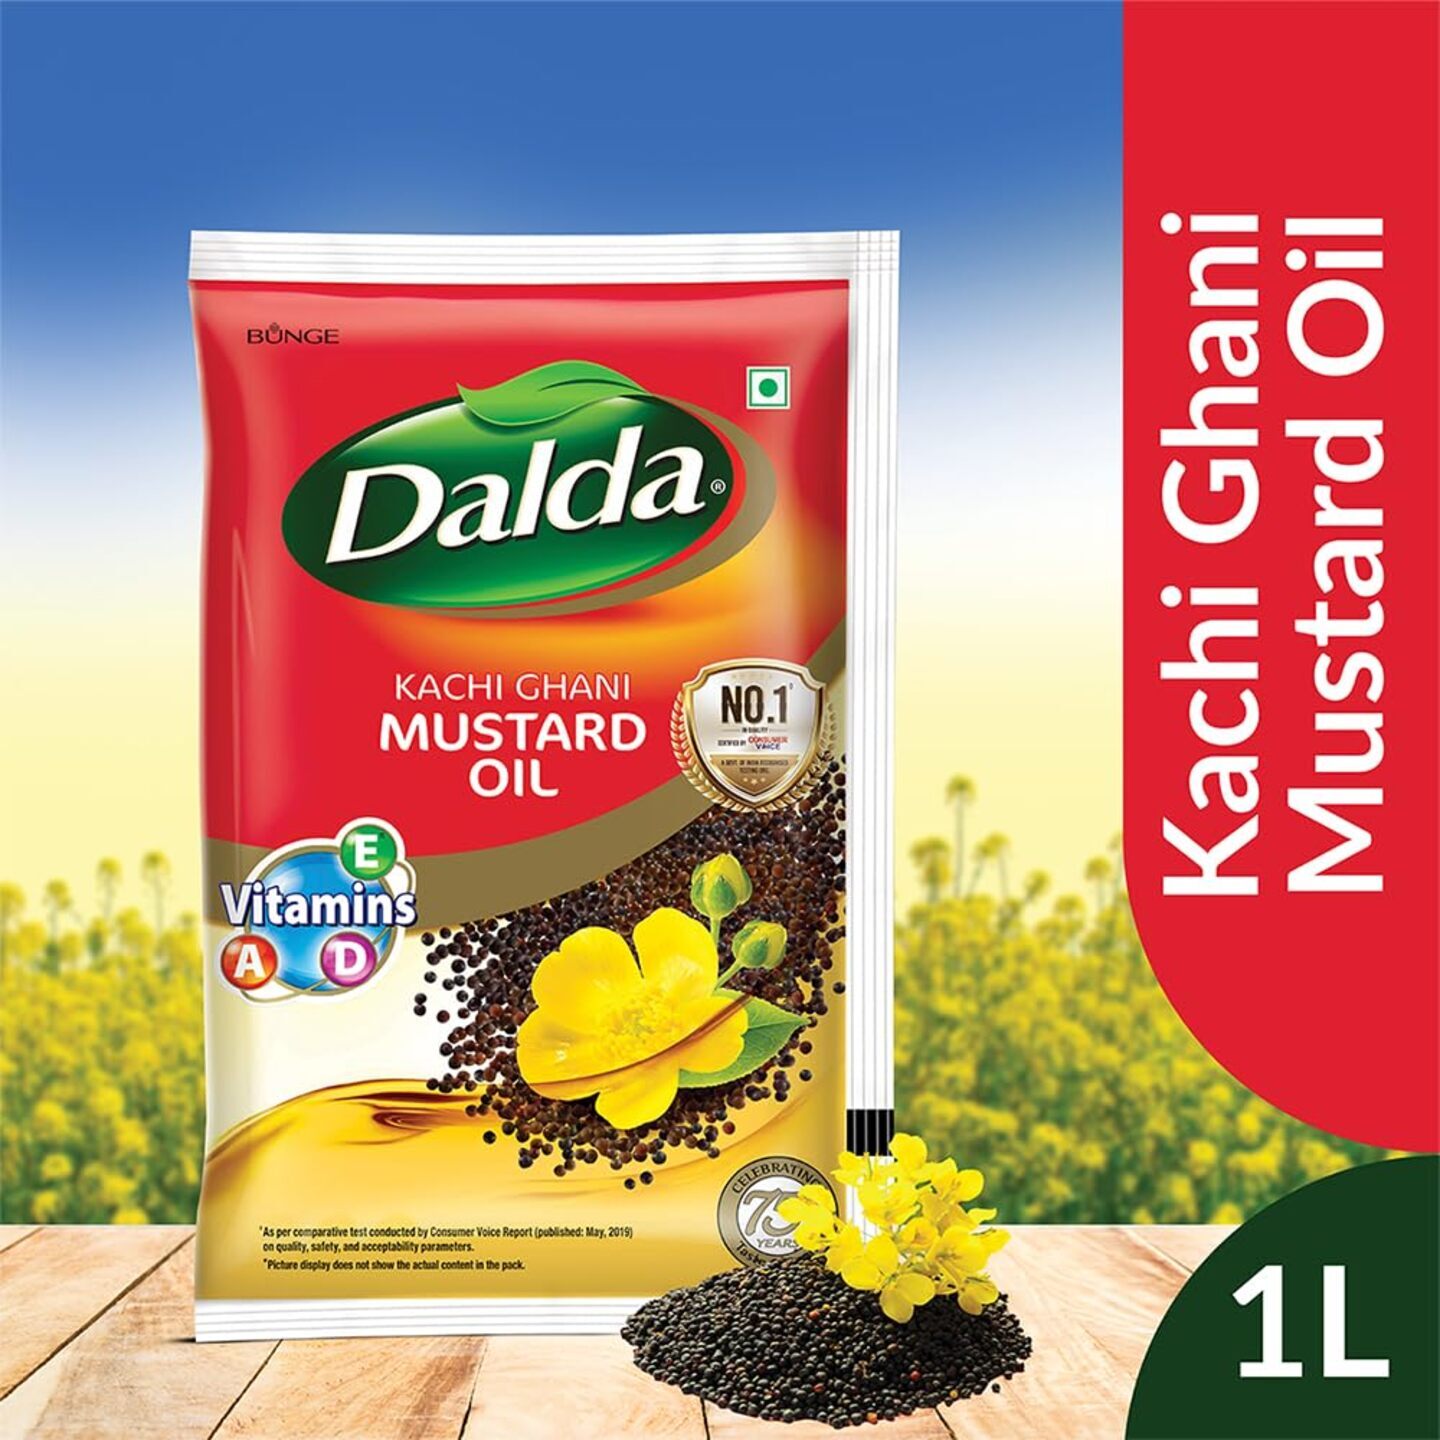 Dalda Kachi Ghani Mustard Oil - 1 Litre (Pouch)